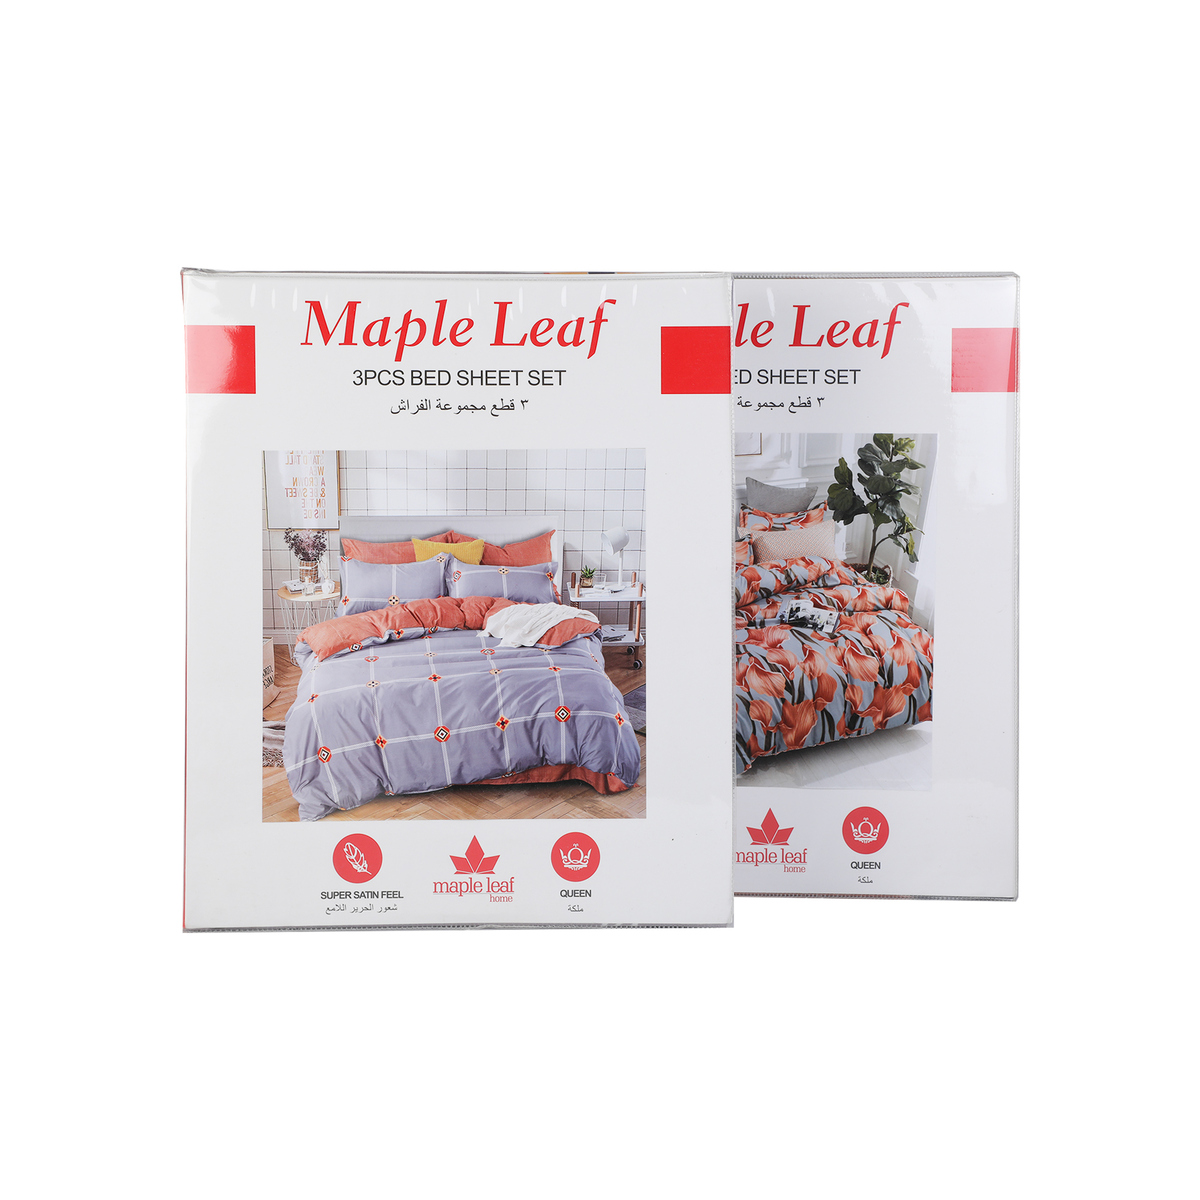 Maple Leaf Bed Sheet 3pcs Set 230x260cm Assorted Colors